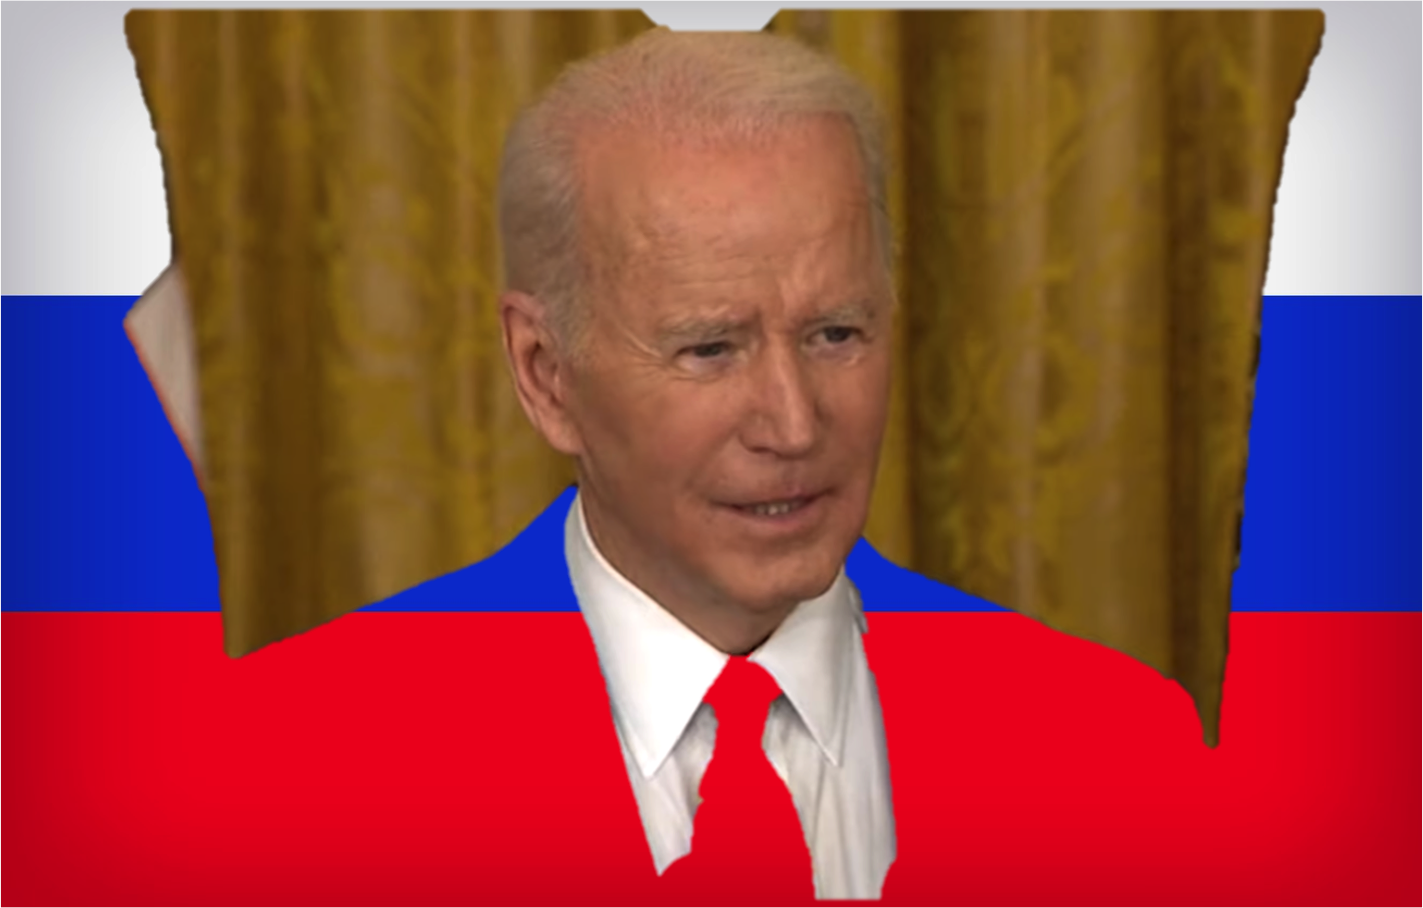 President Biden on backdrop of Russian flag.